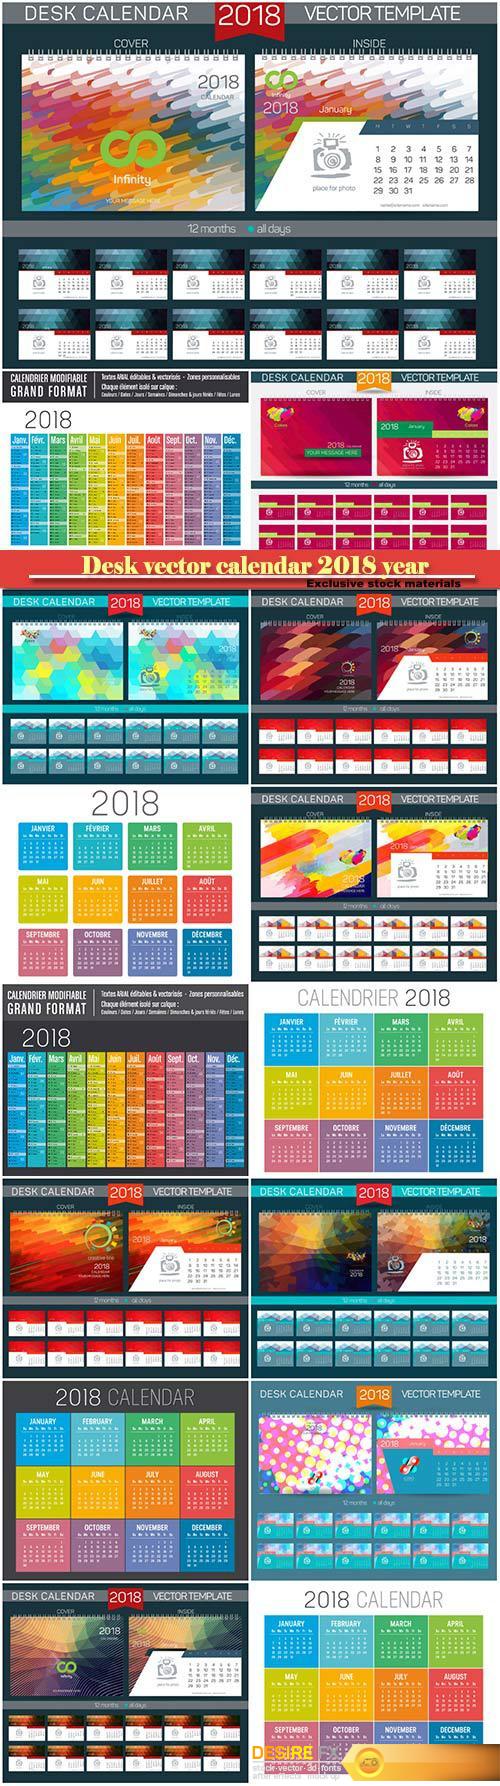 Desk vector calendar design templatefor 2018 year # 6